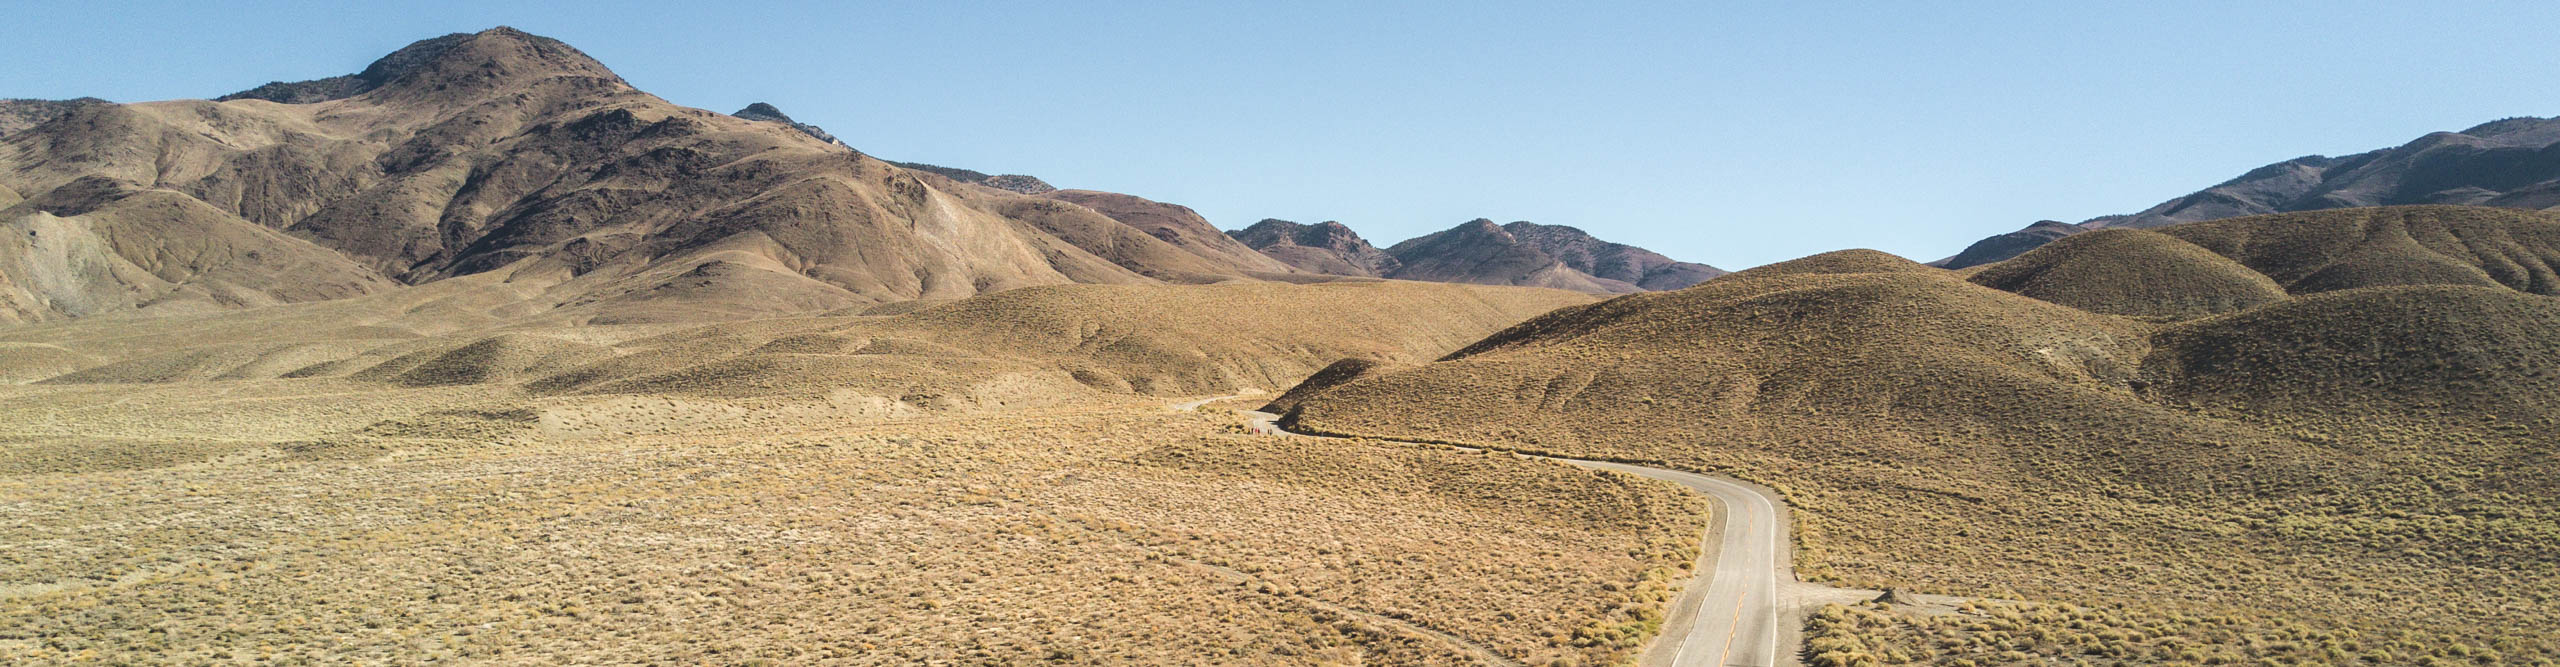 Road through desert in California, USA